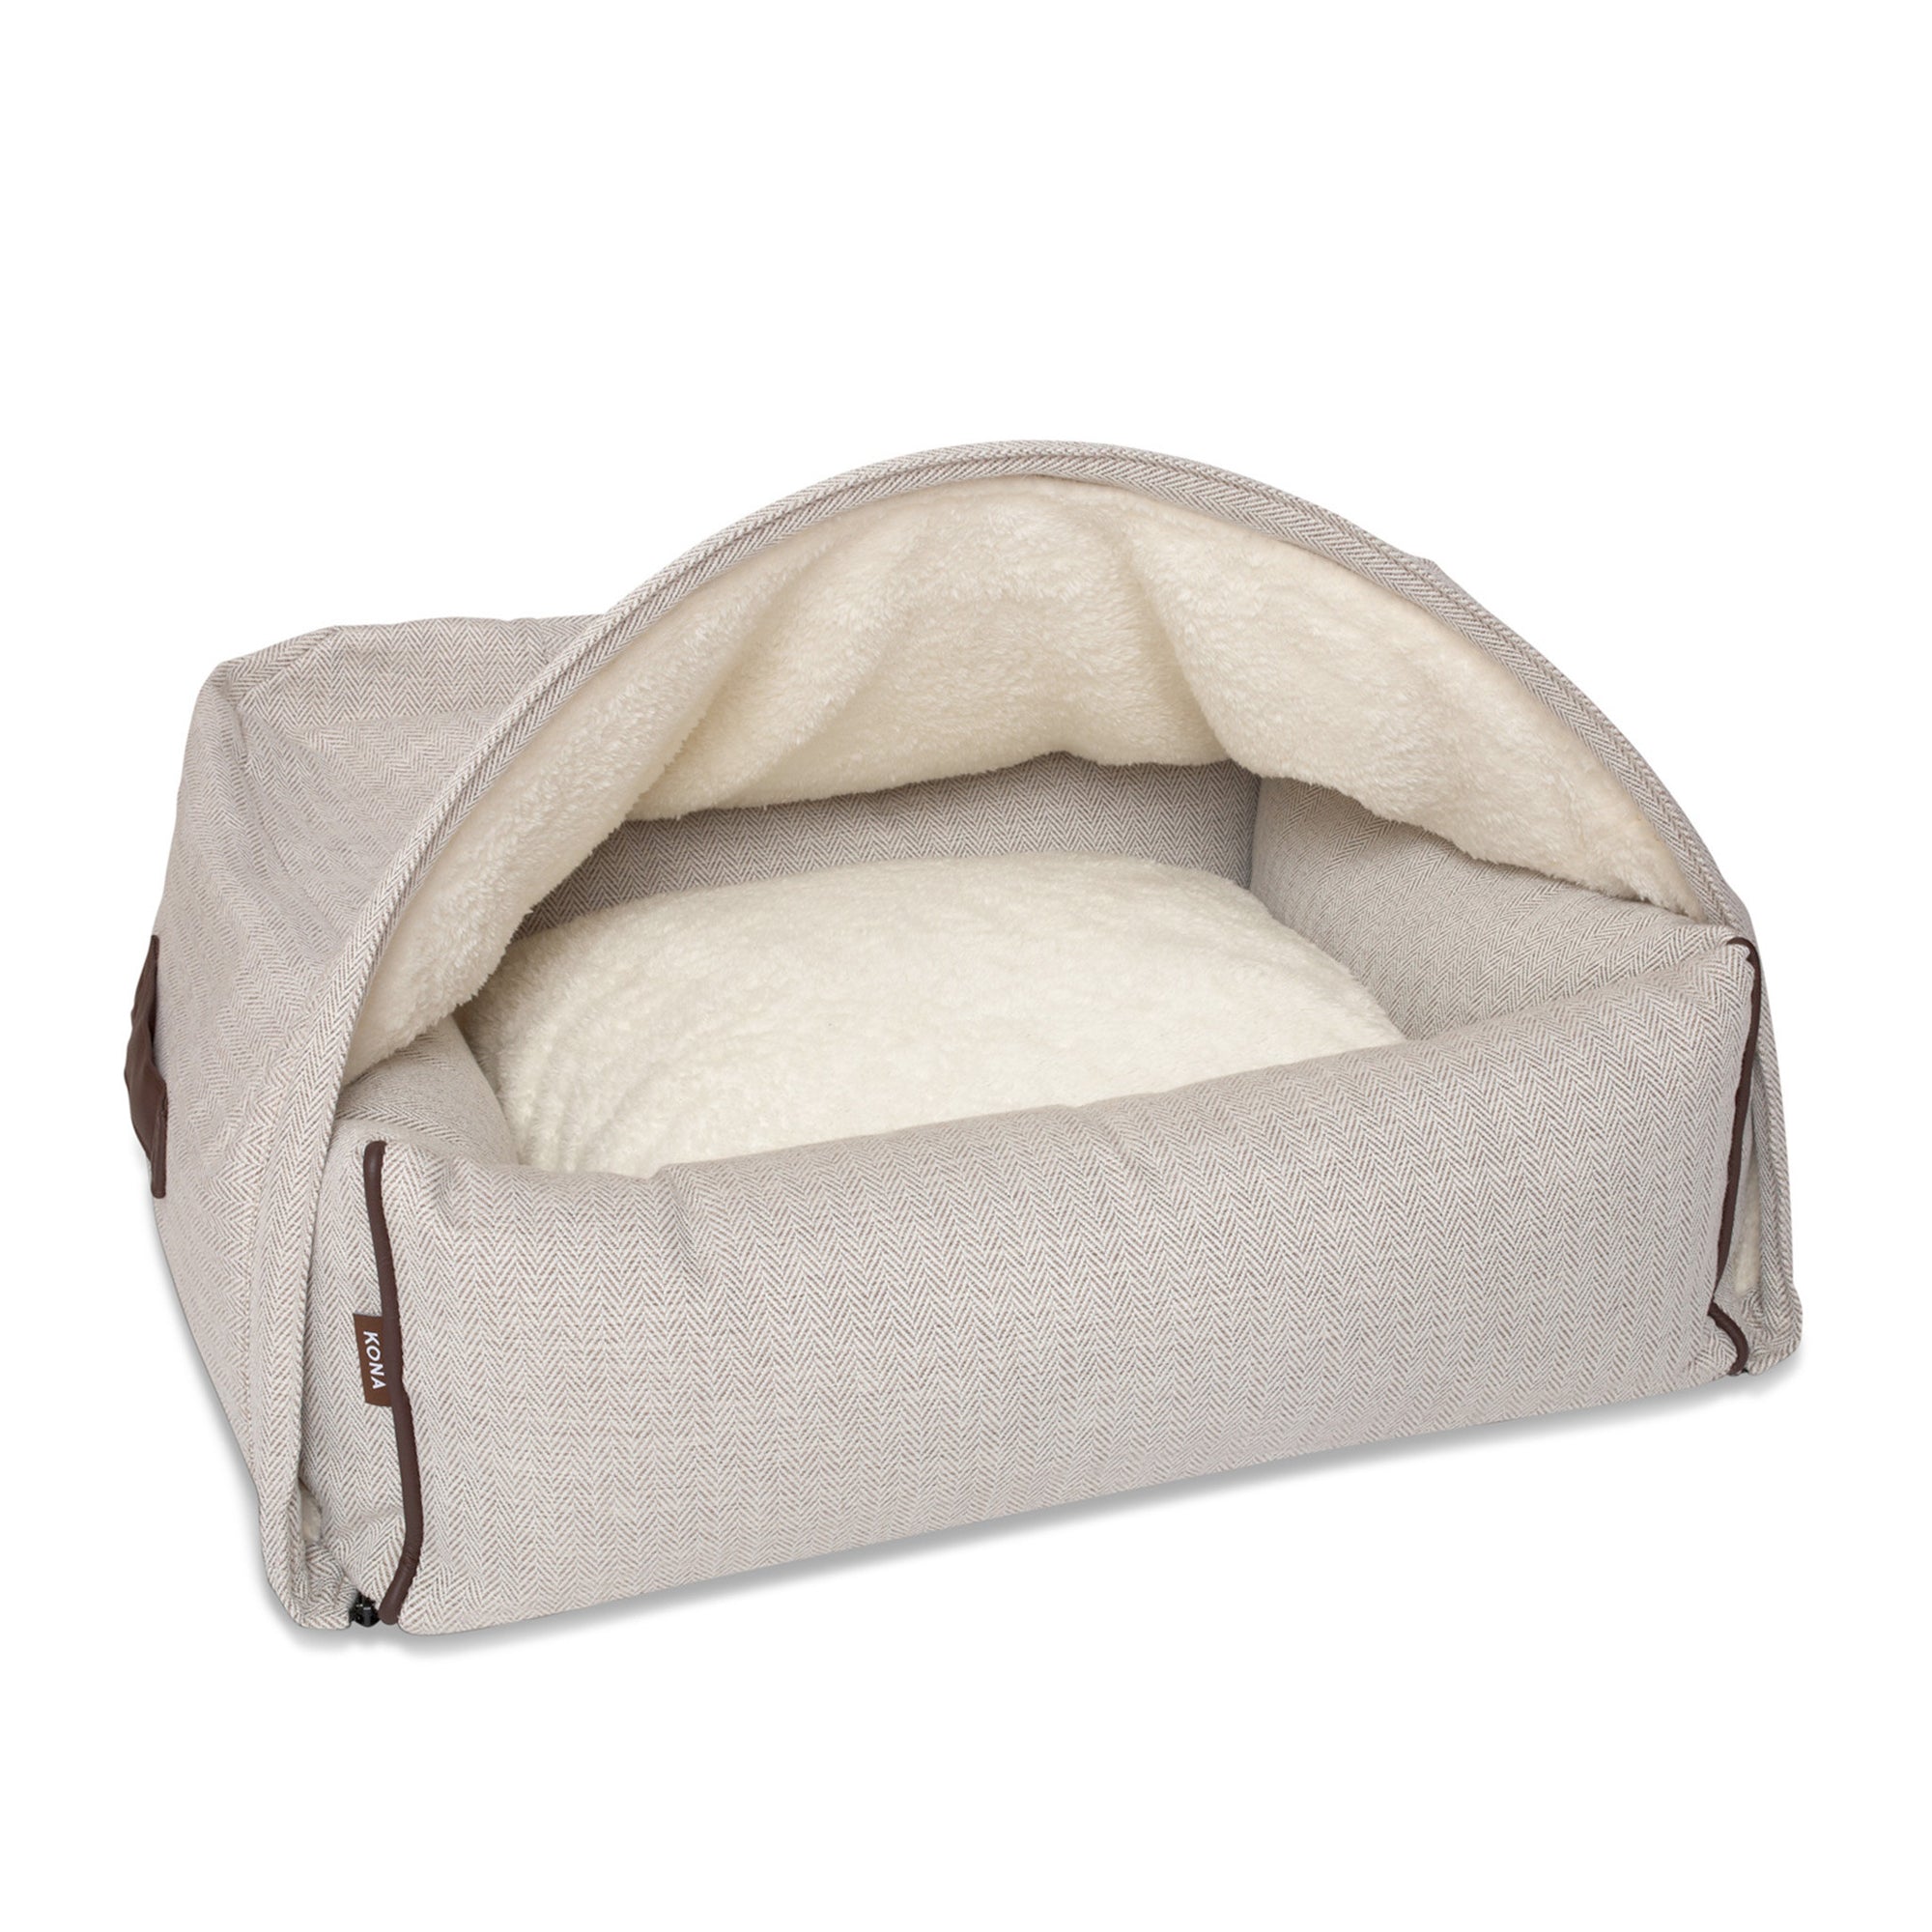 KONA CAVE® designer Snuggle Cave dog bed in cream herringbone fabric with leather trim.  Hund Höhlenbett.